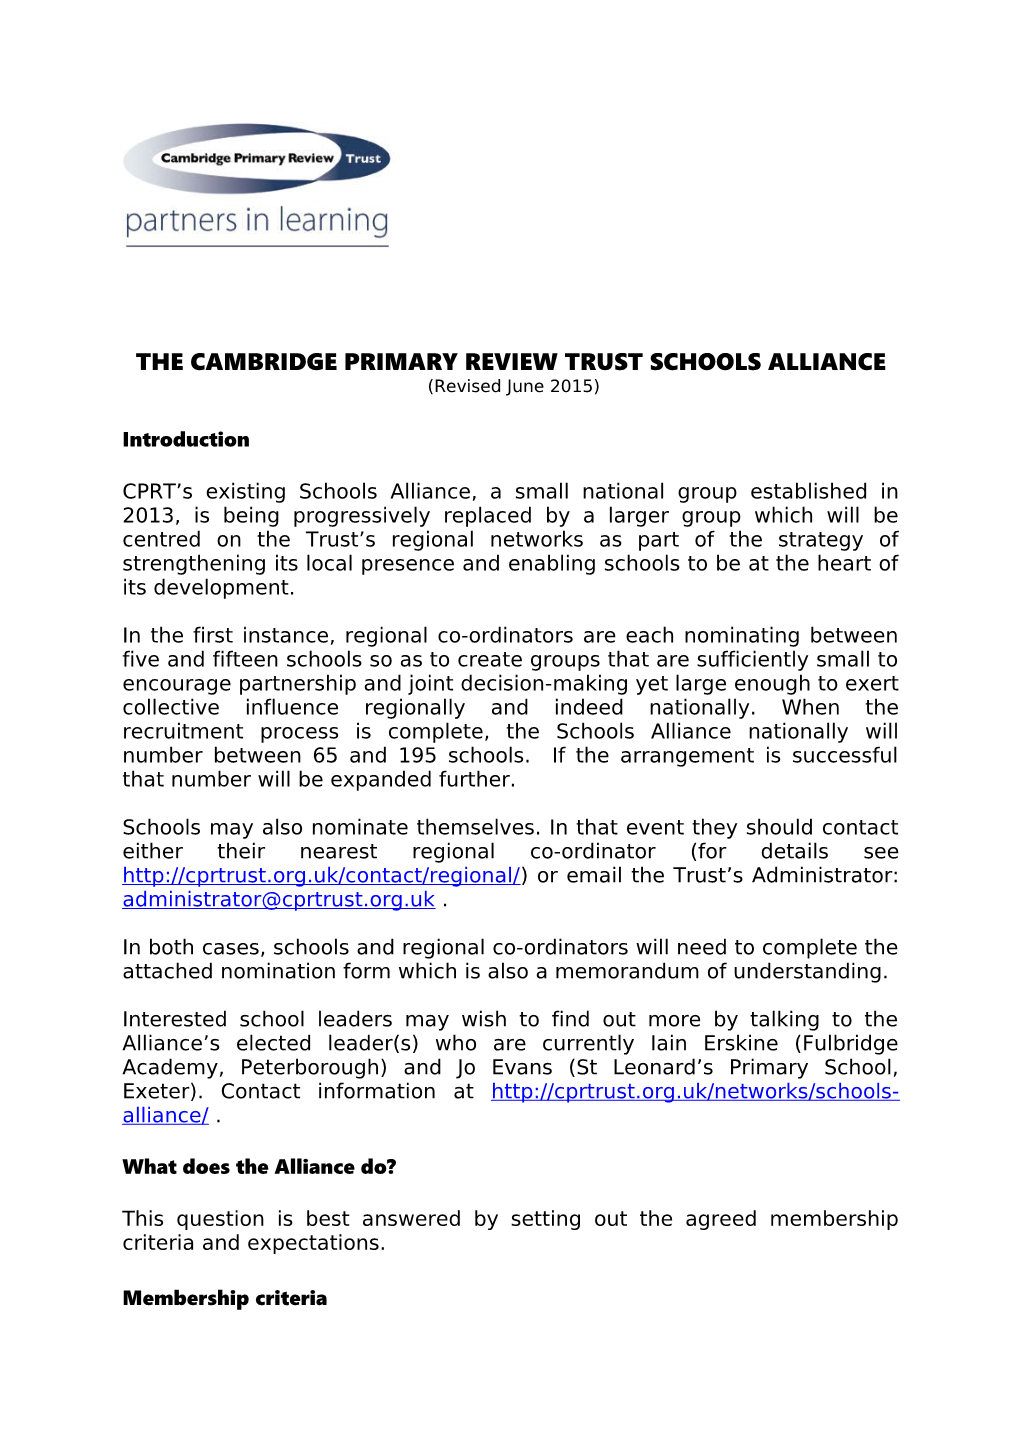 The Cambridge Primary Review Trust Schools Alliance